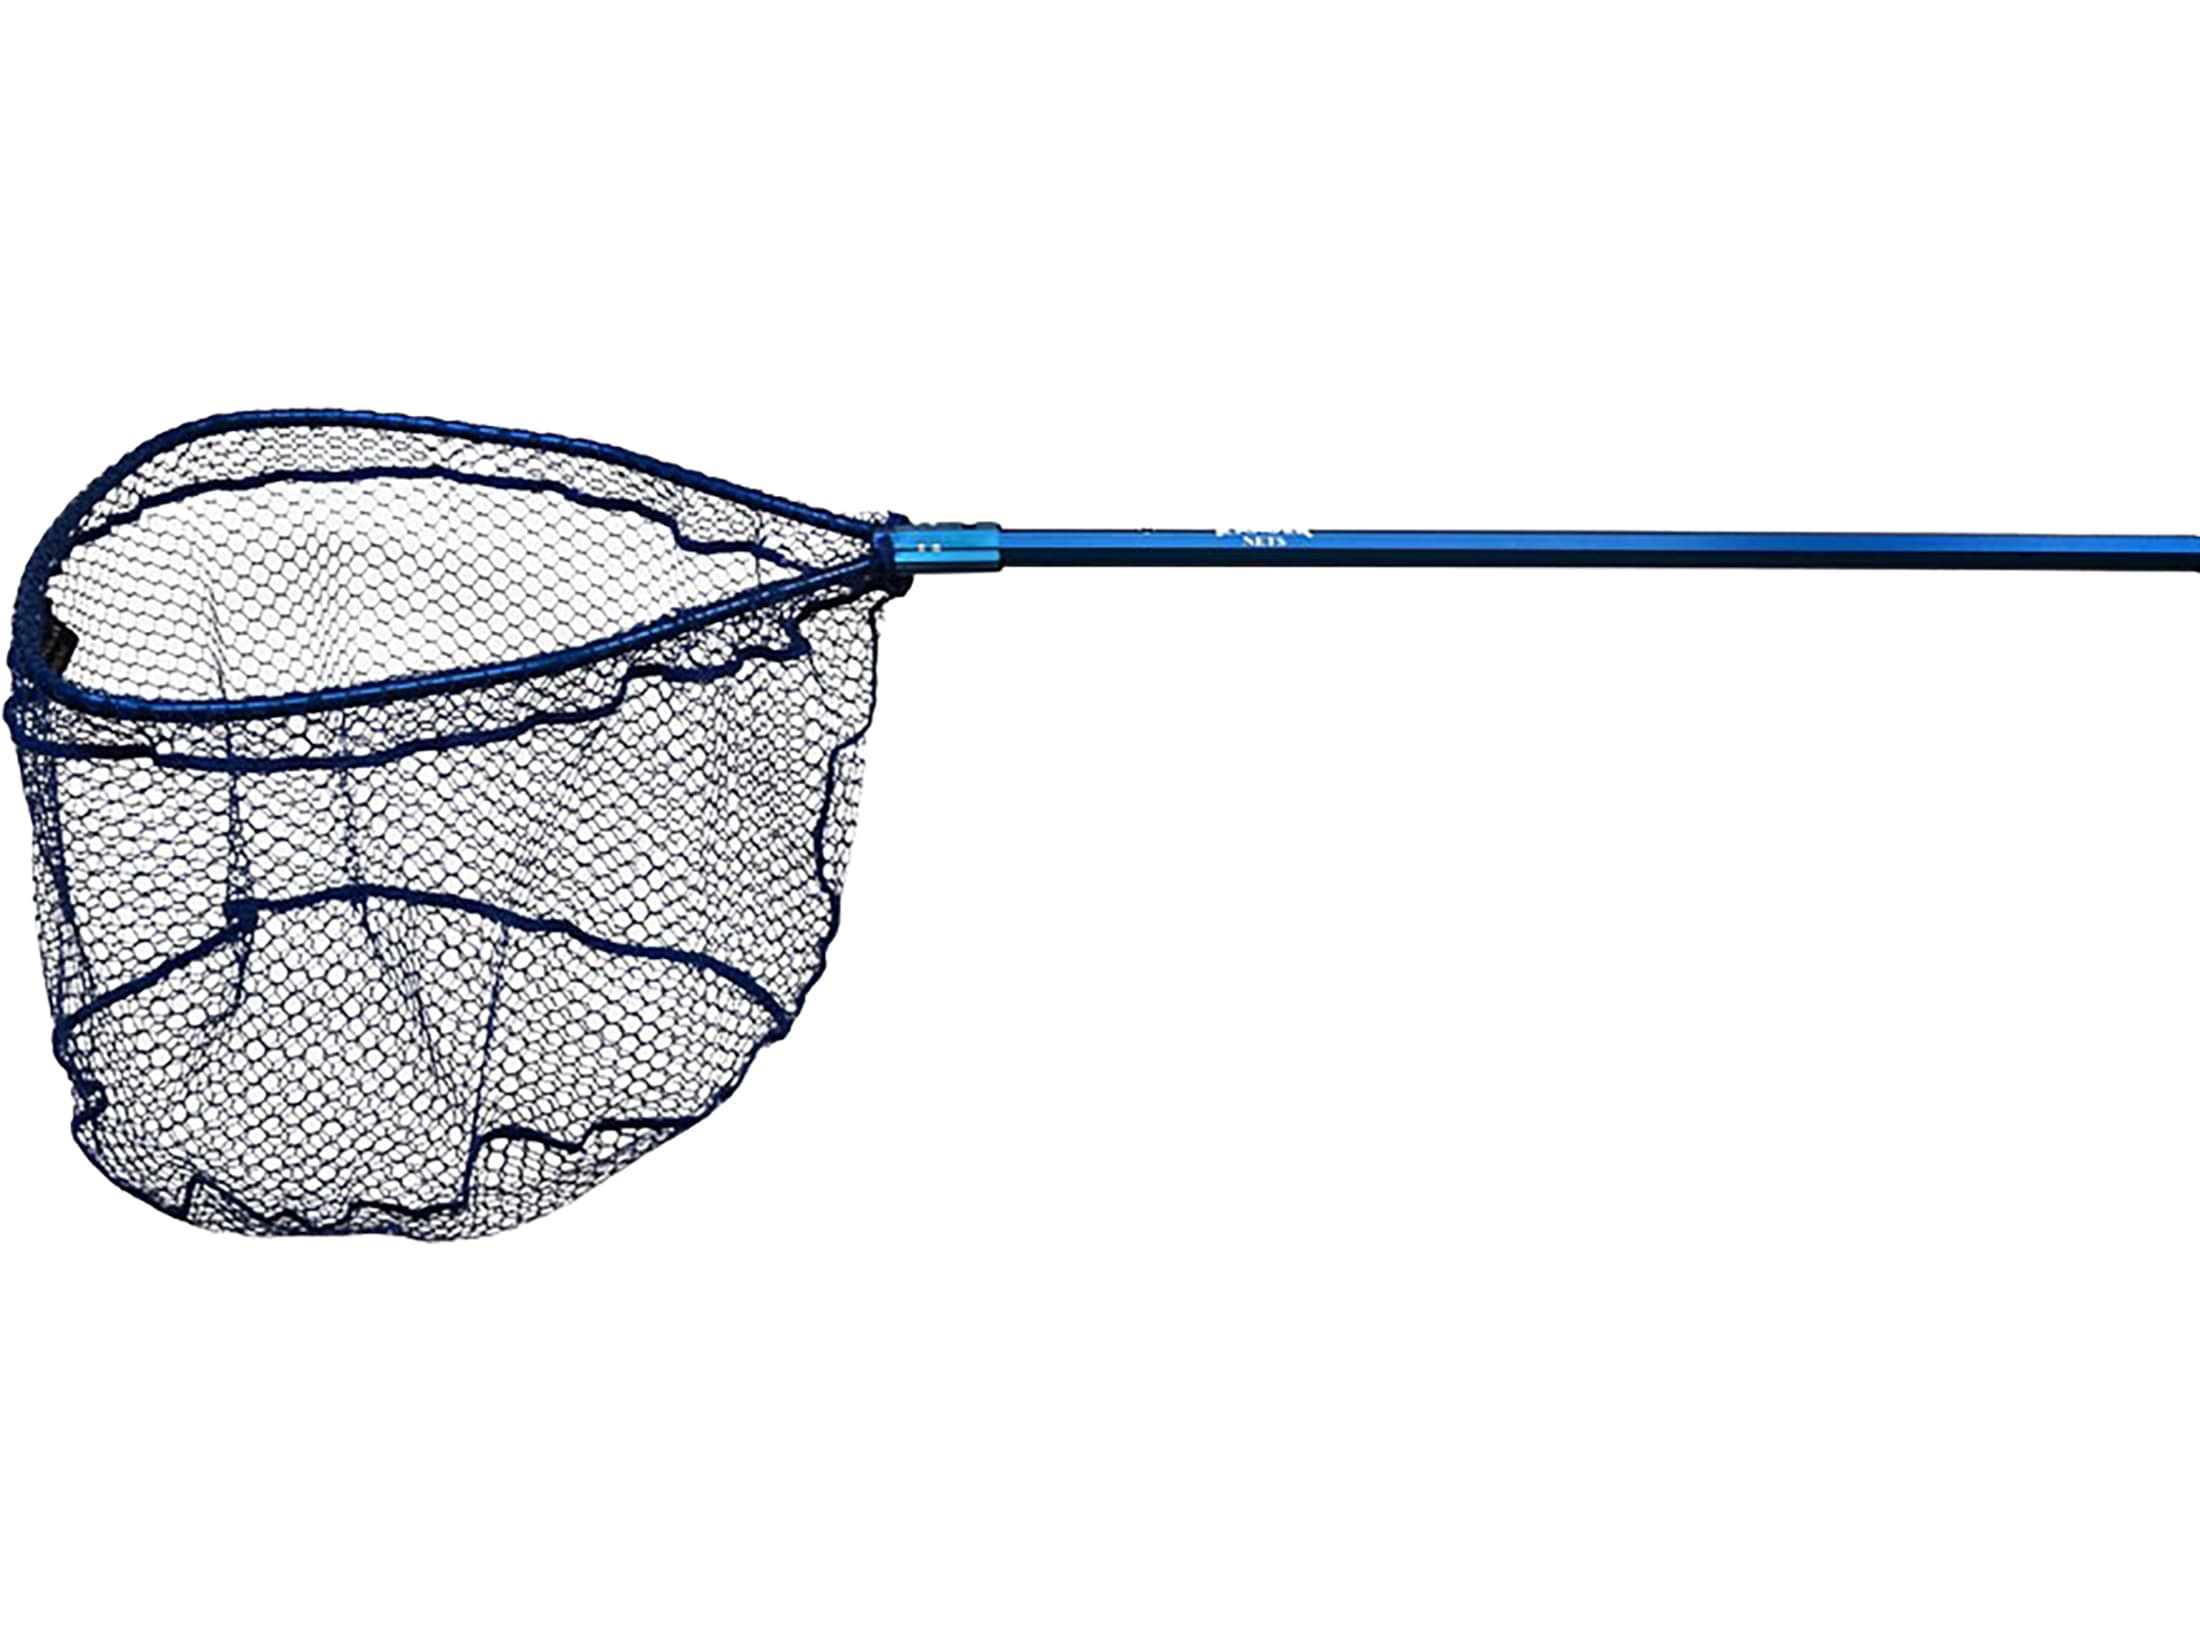 Fishing Landing Tool Stainless Steel Nylon Net Nets Replacement